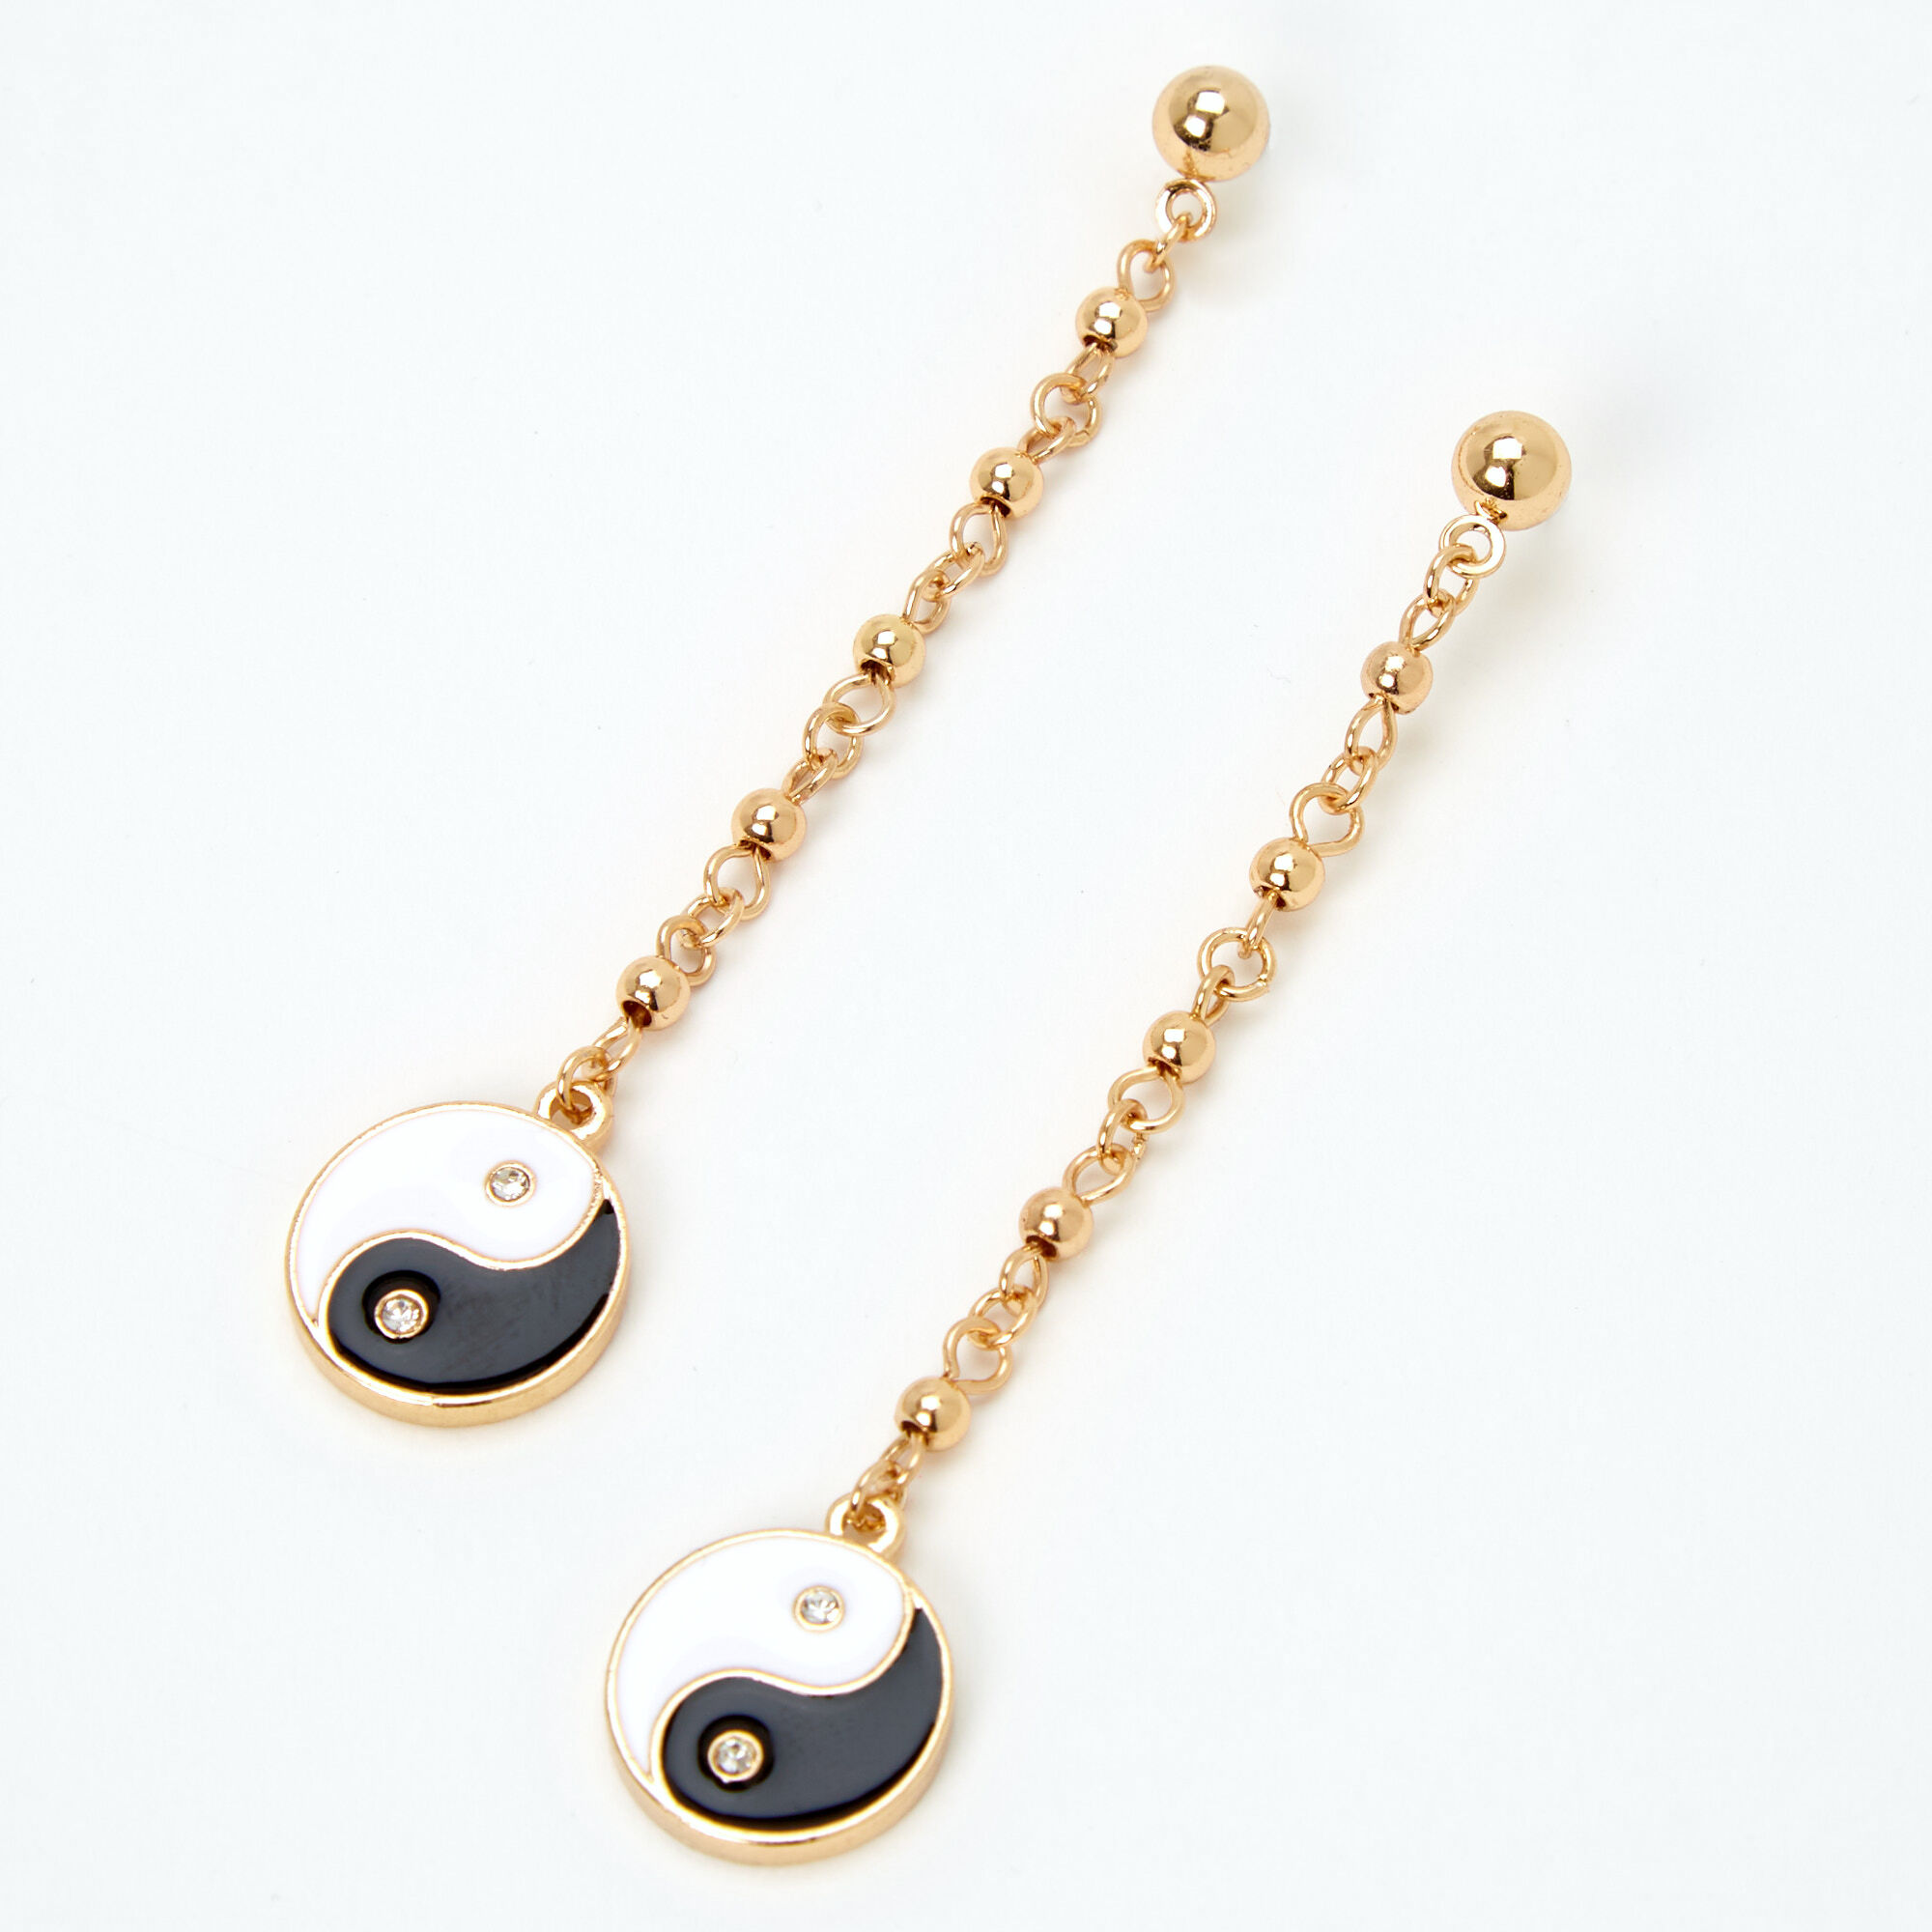 View Claires Tone Yin Yang Linear Chain 3 Drop Earrings Gold information